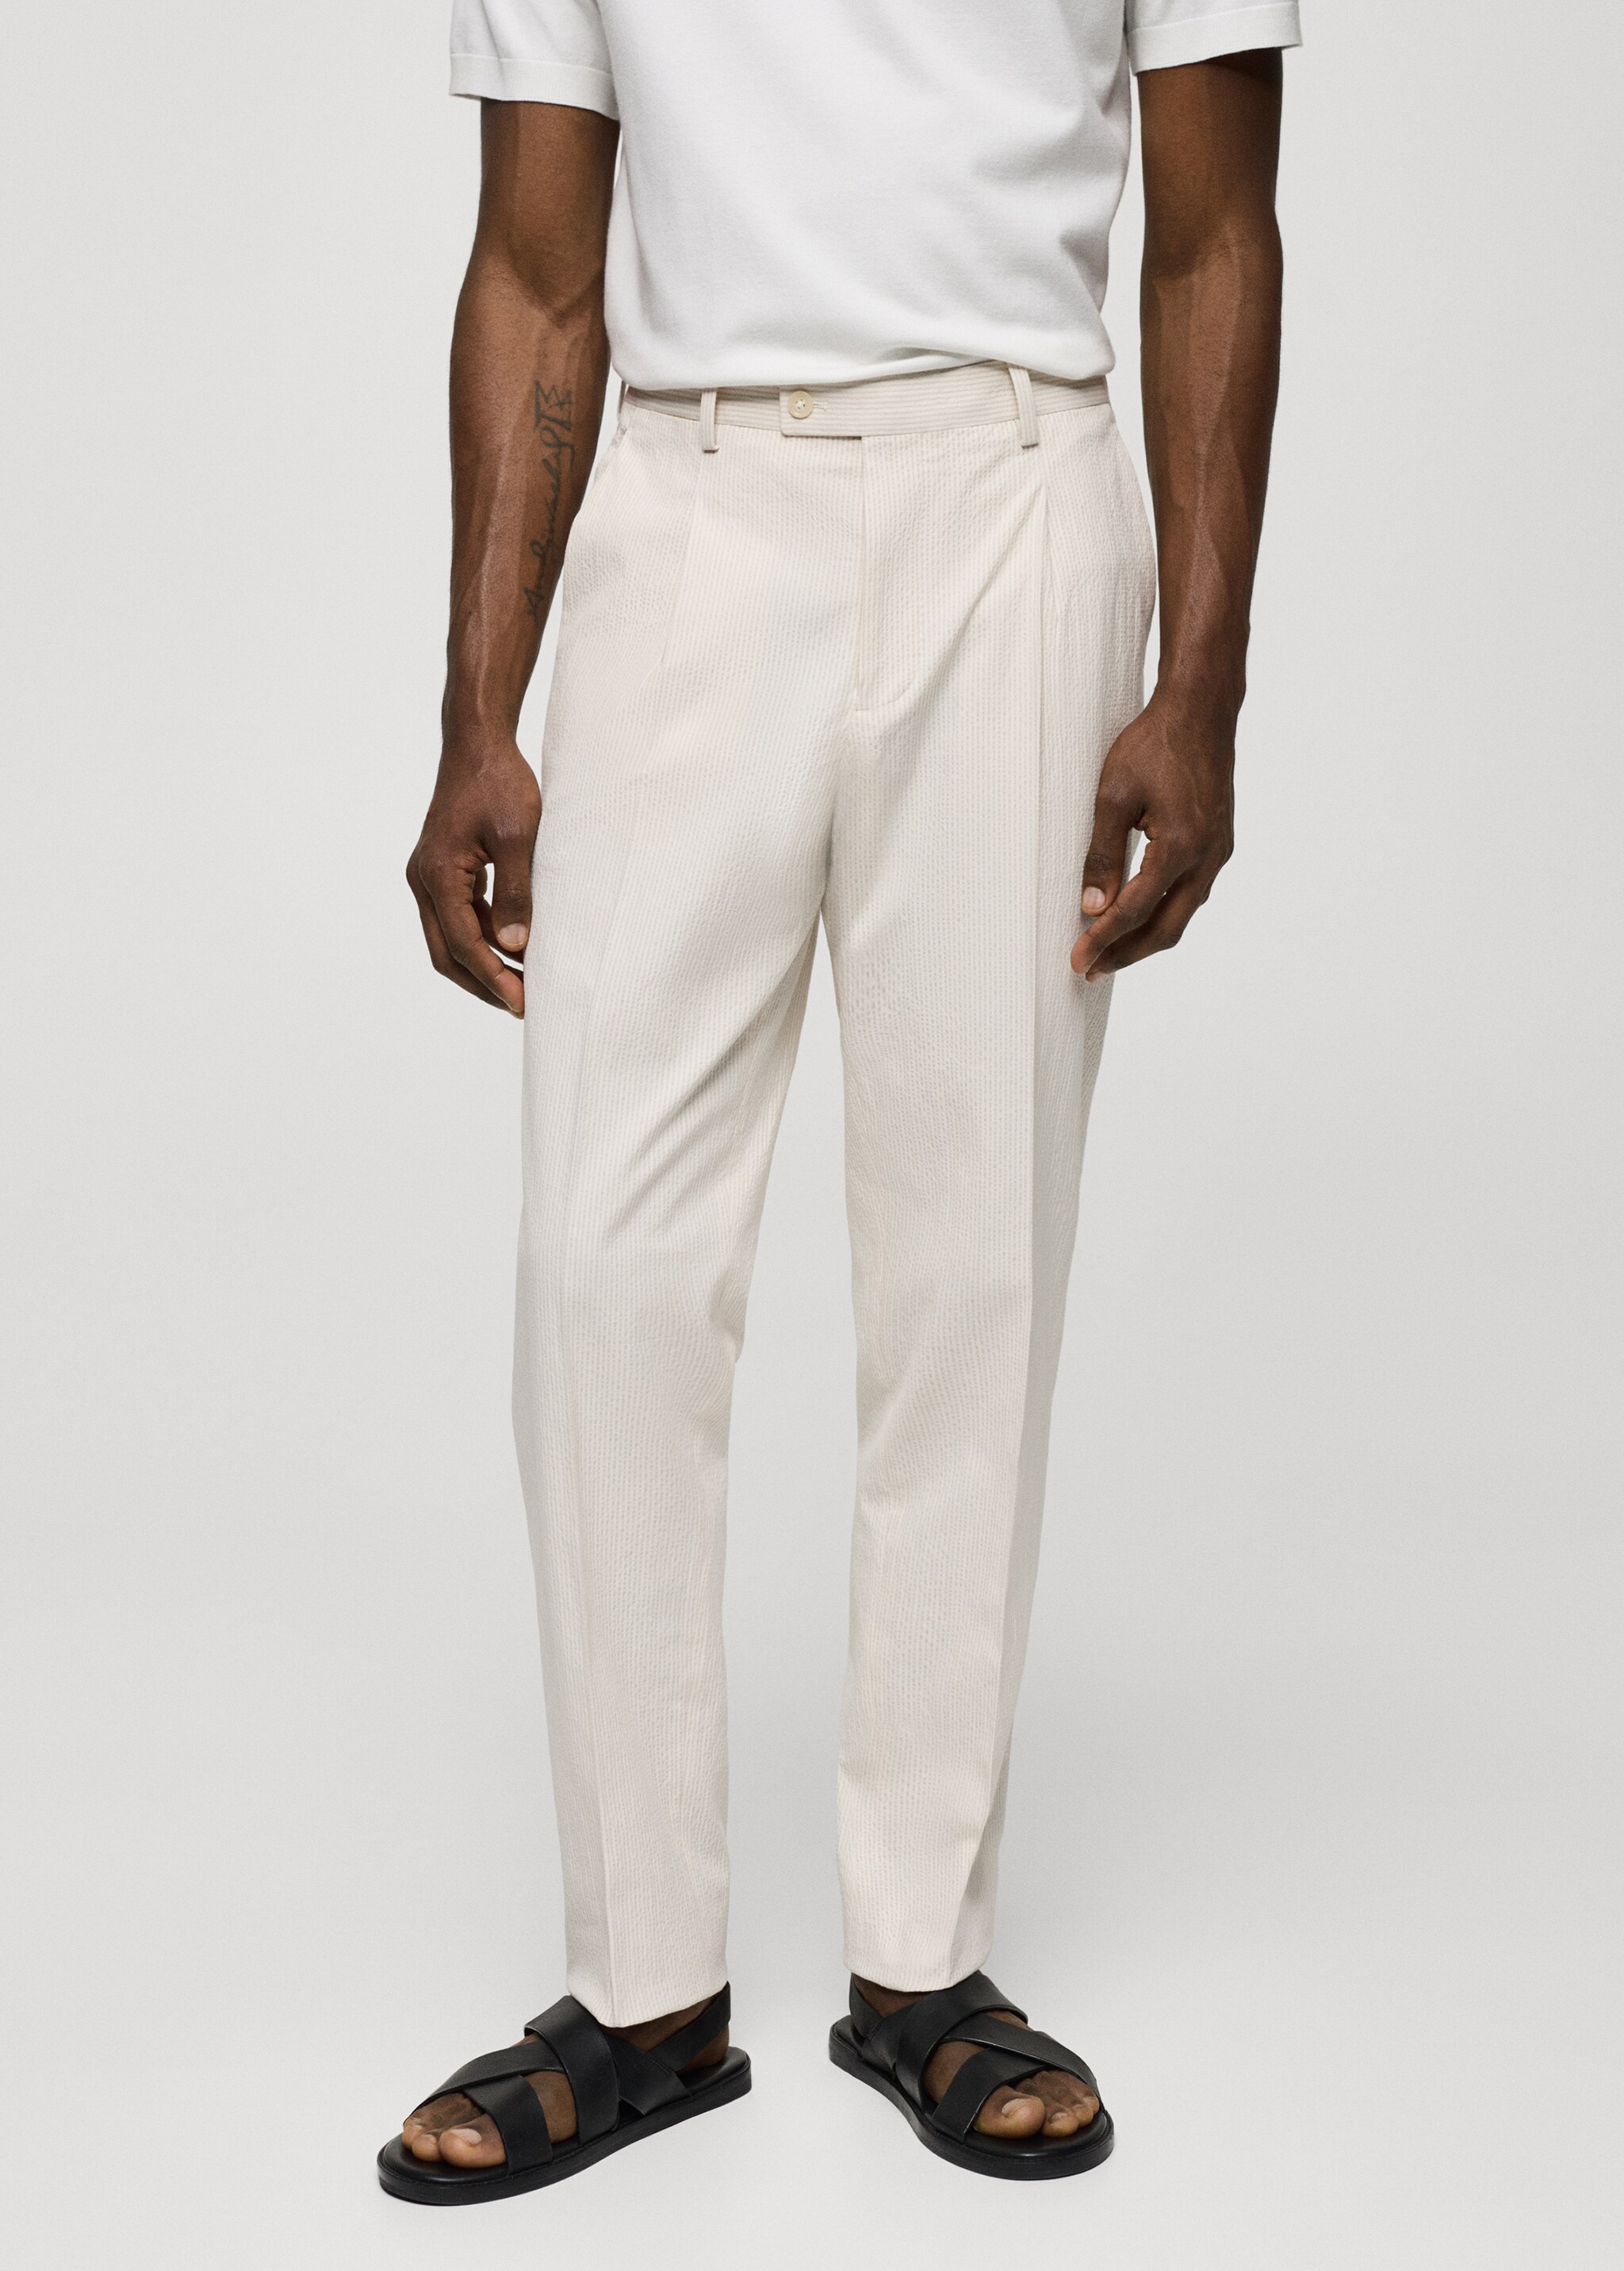 Pantalon costume slim-fit coton seersucker rayures - Plan moyen